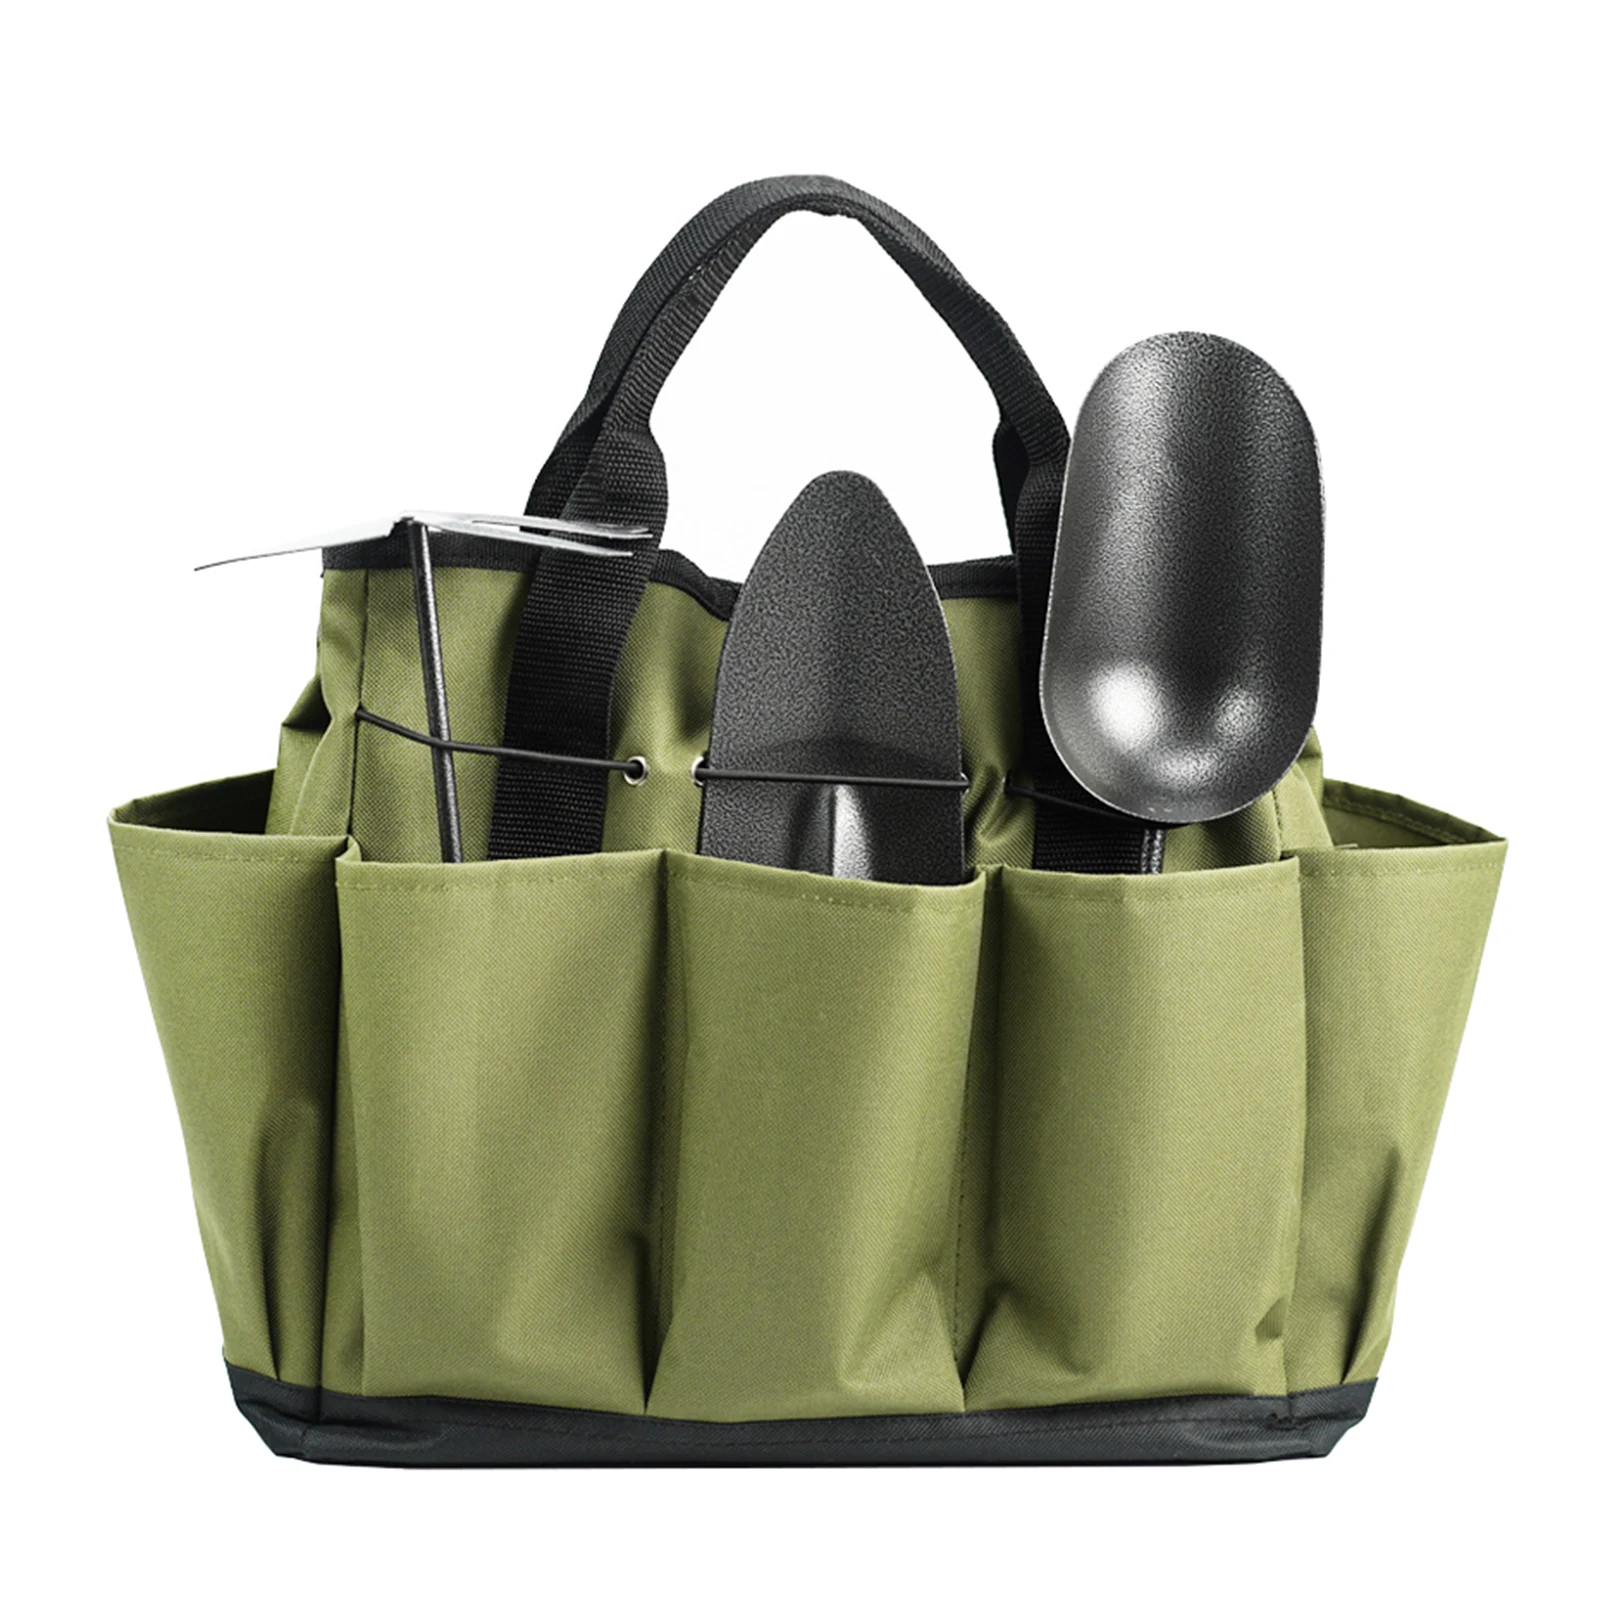 Details about   Garden Tote Gardening Tool Storage Bag Multi Pocket Garden Tool Kit Holder Bag 